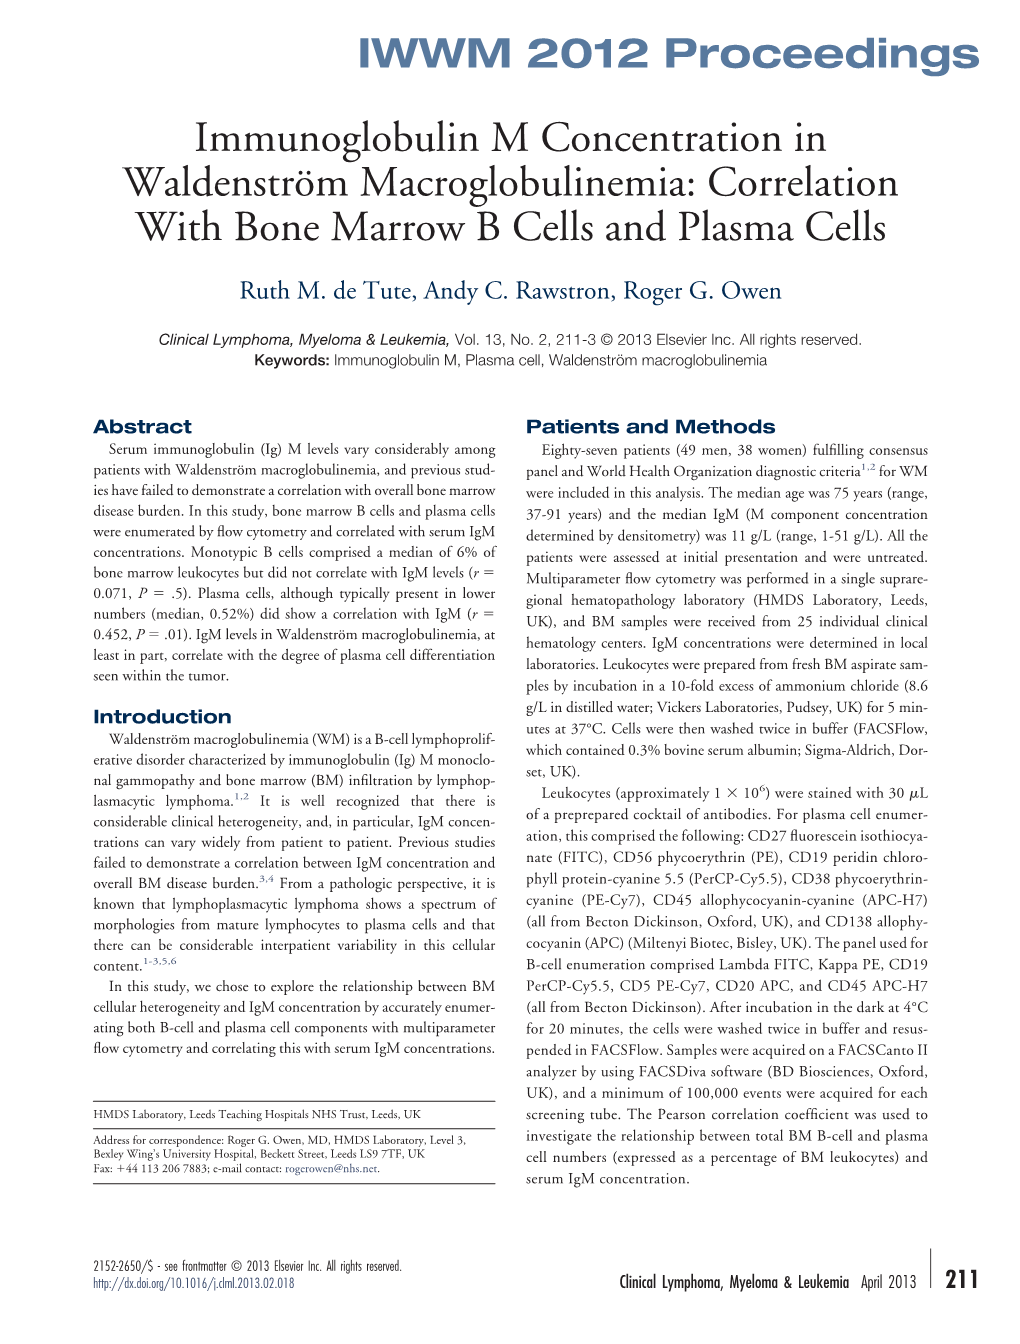 Correlation with Bone Marrow B Cells and Plasma Cells